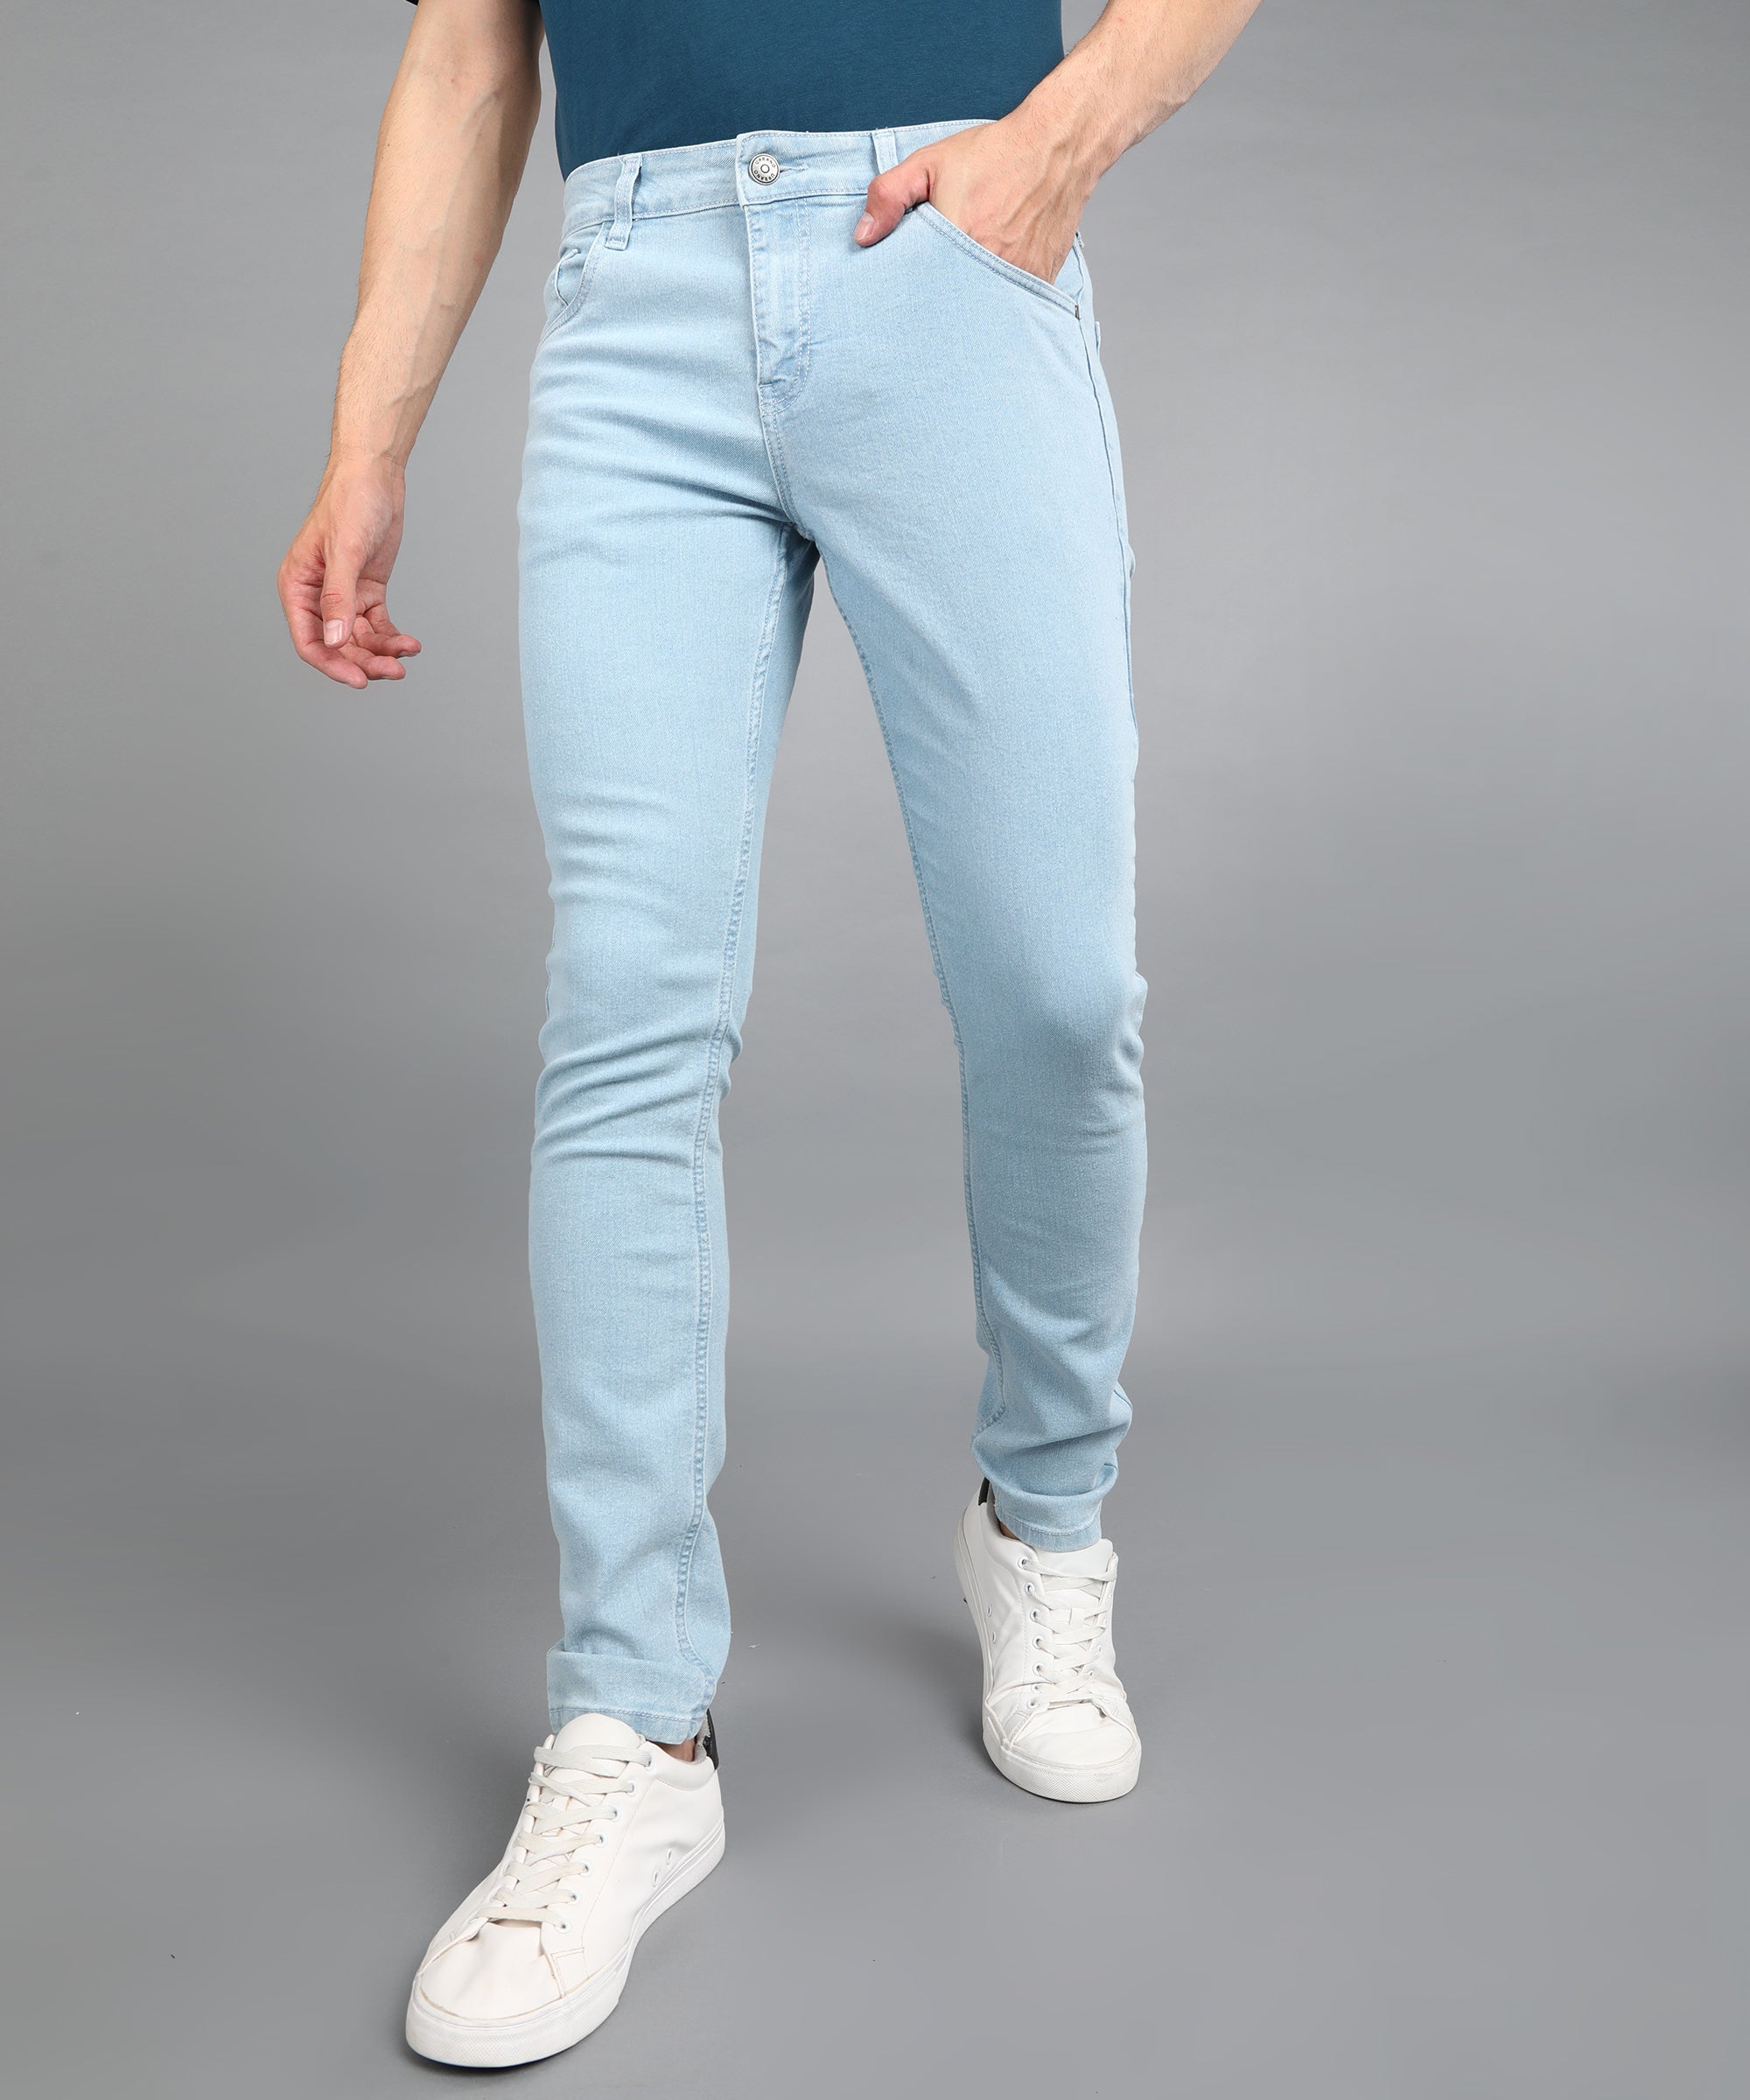 Men's Ice Blue Regular Fit Washed Jeans Stretchable